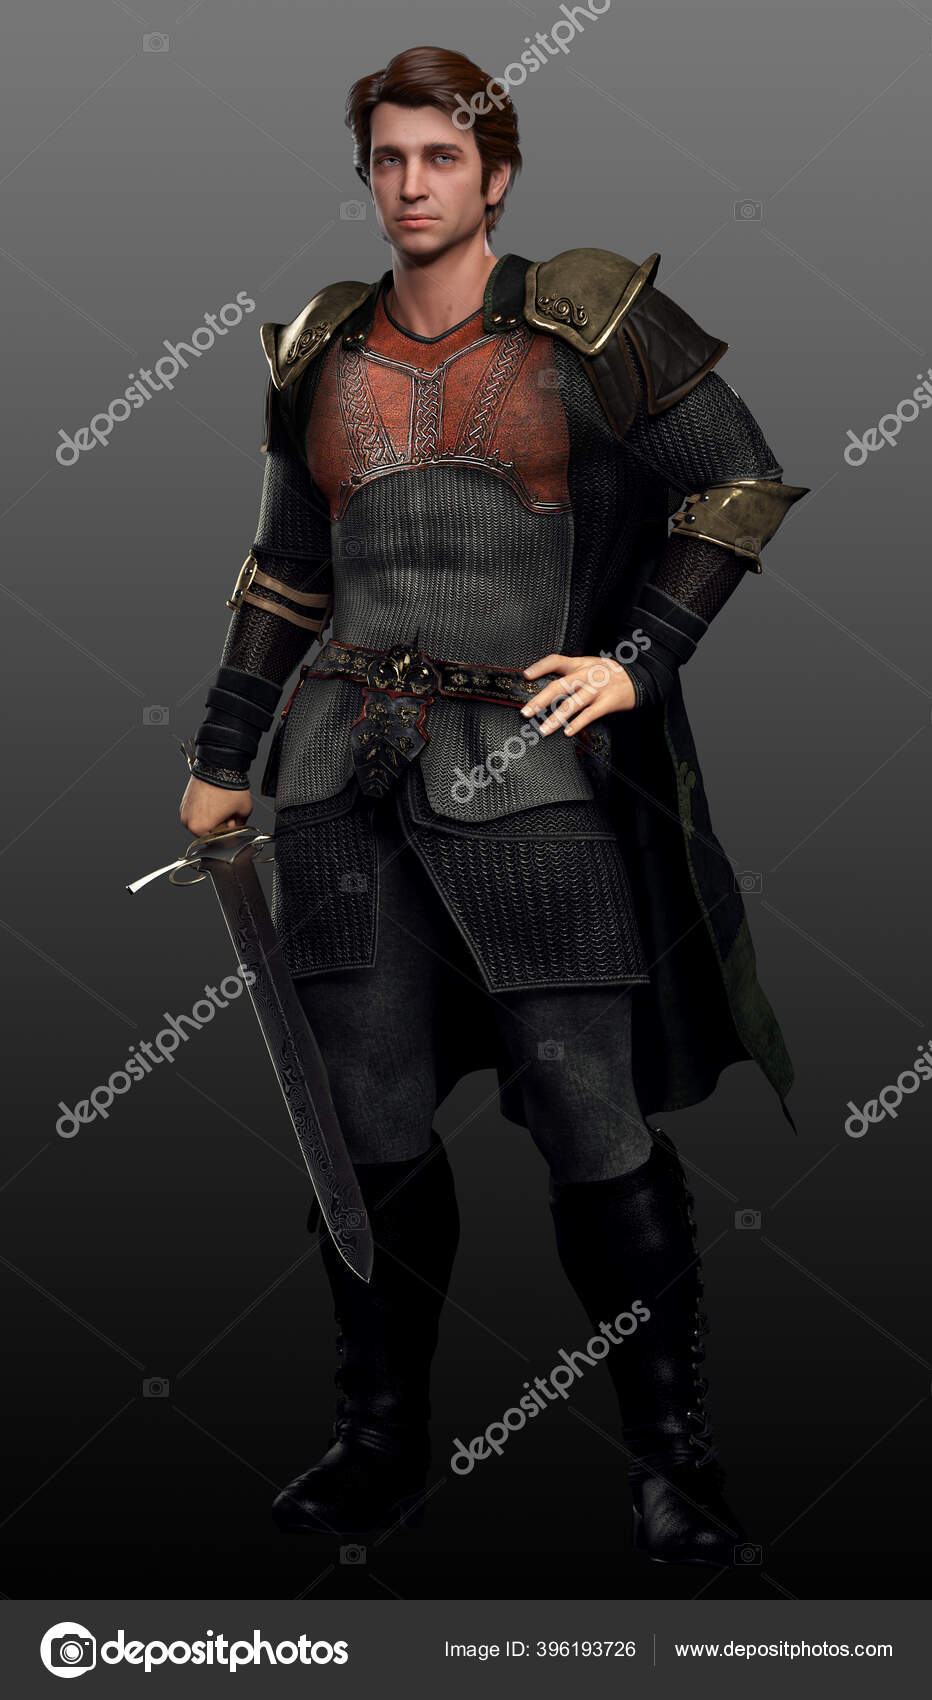 https://st4.depositphotos.com/1695244/39619/i/1600/depositphotos_396193726-stock-photo-fantasy-medieval-warrior-chainmail-armor.jpg